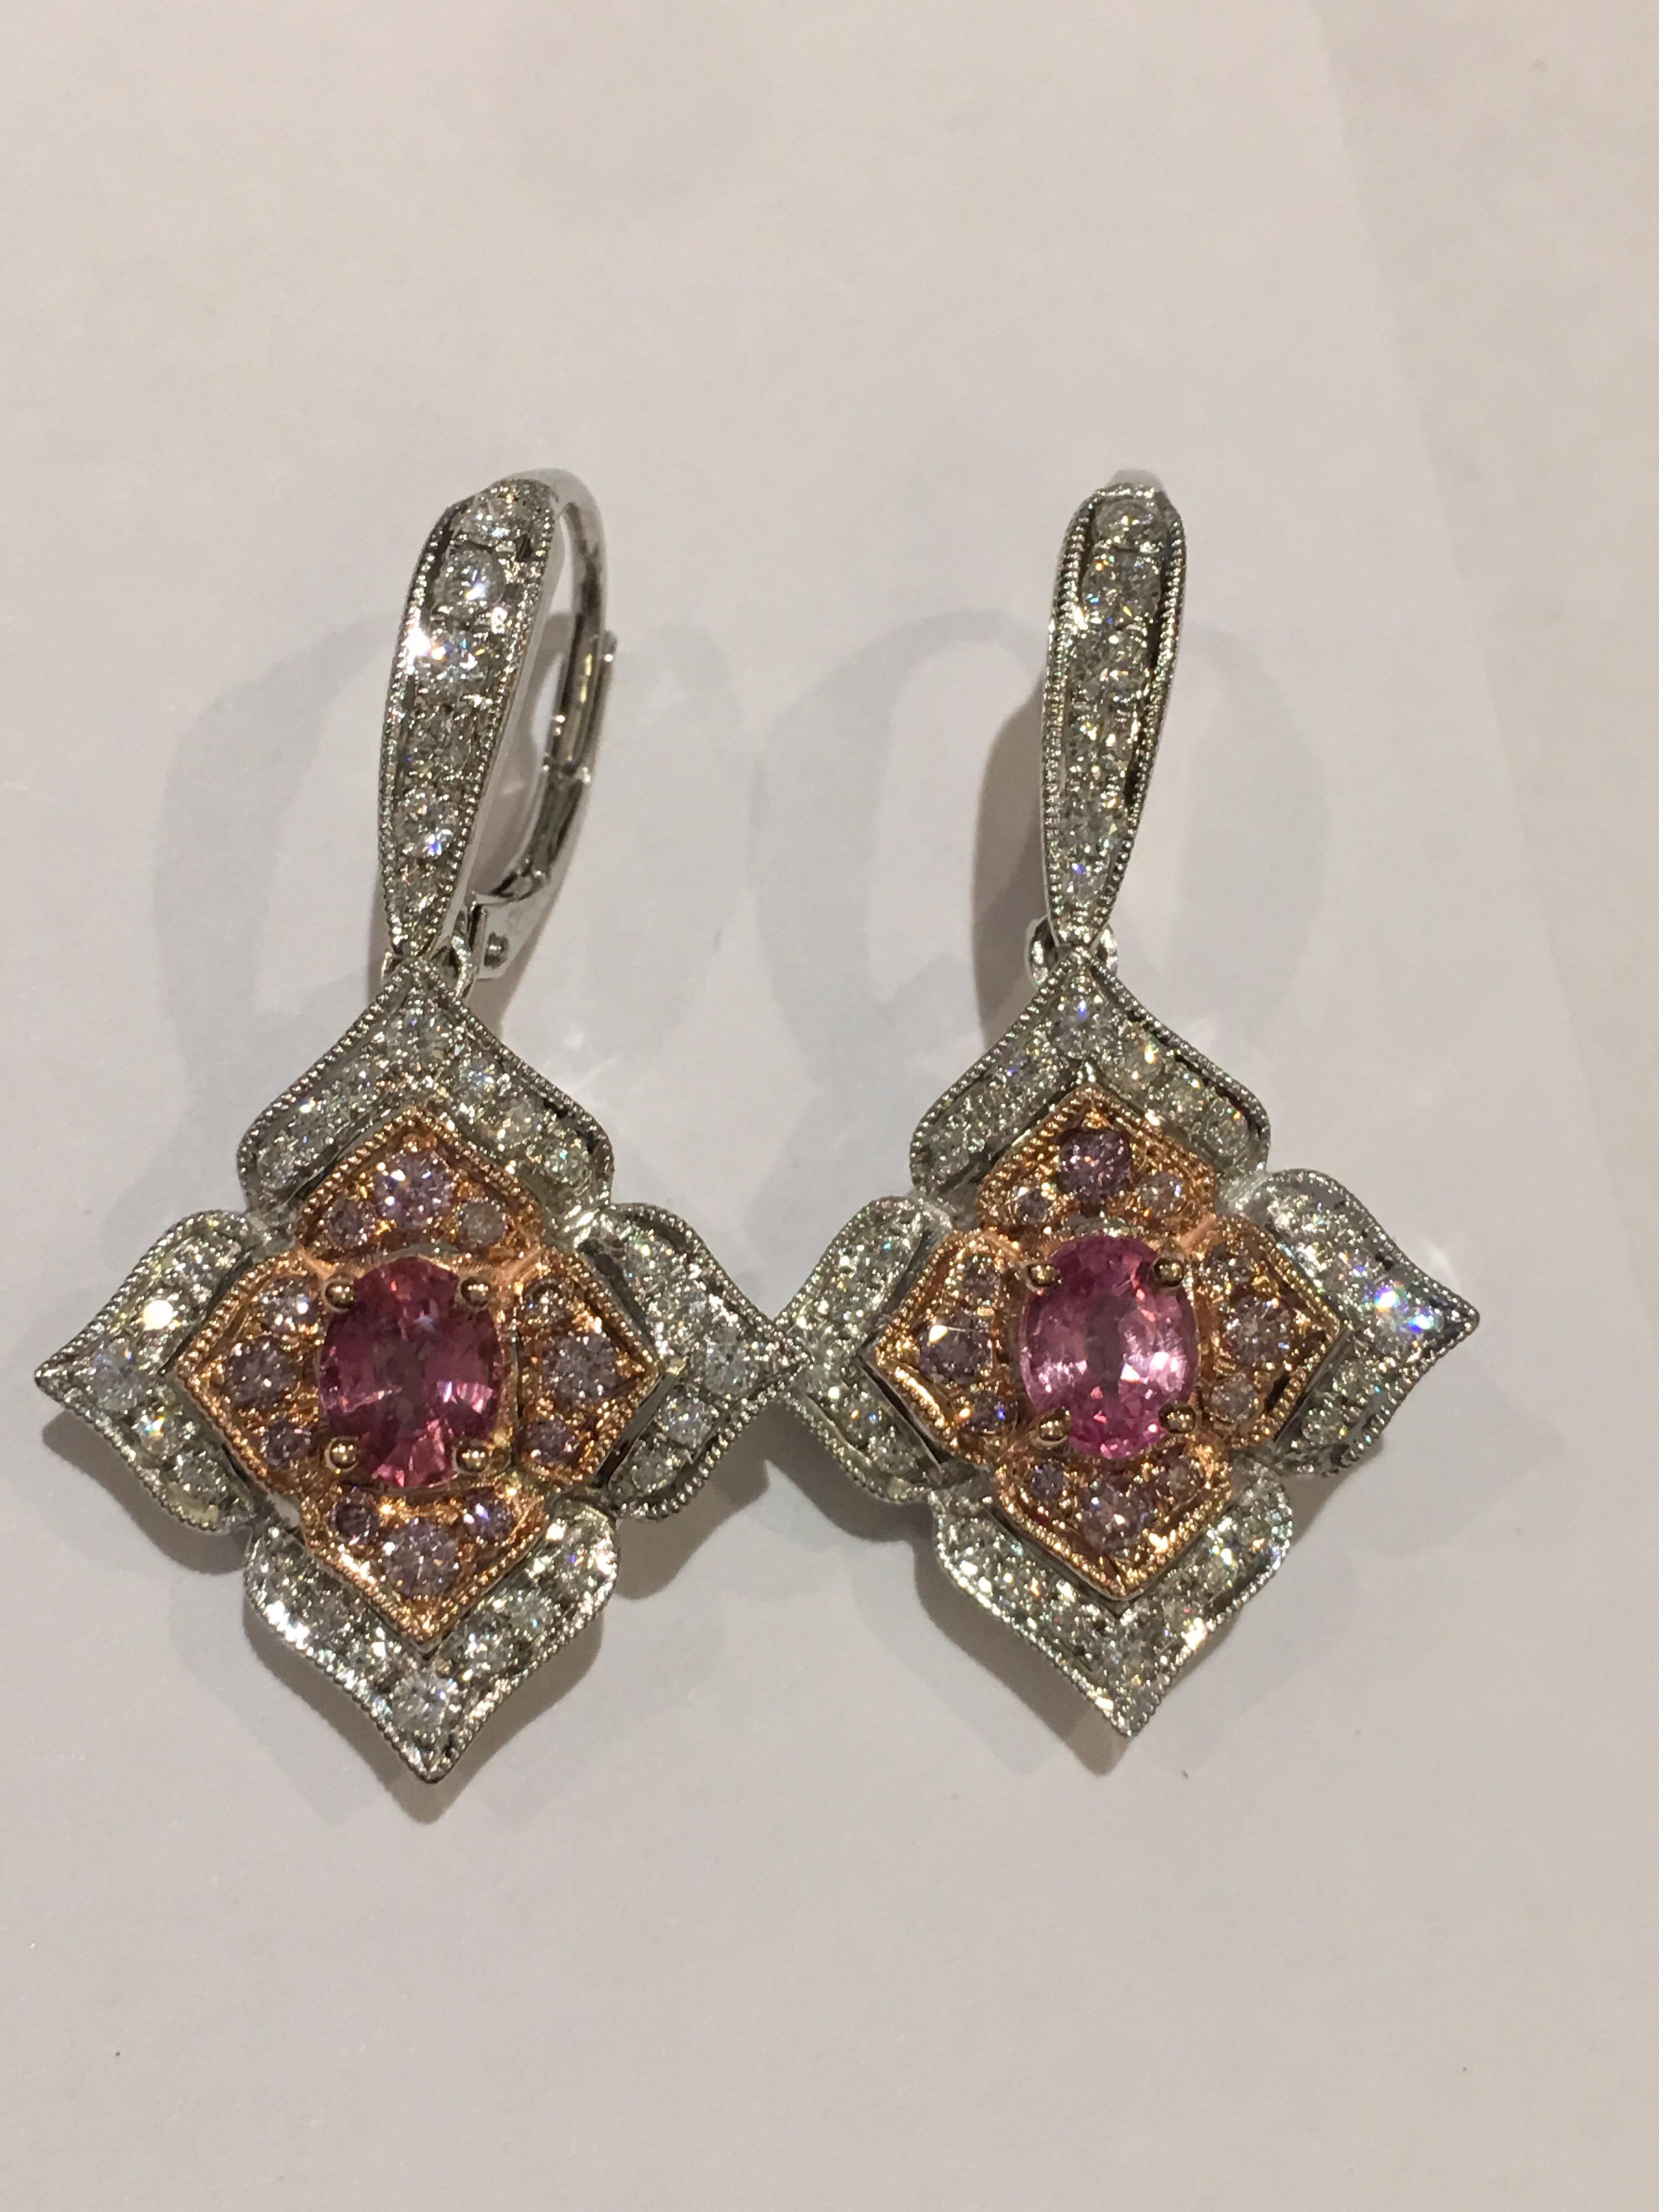 padparadscha sapphire earrings